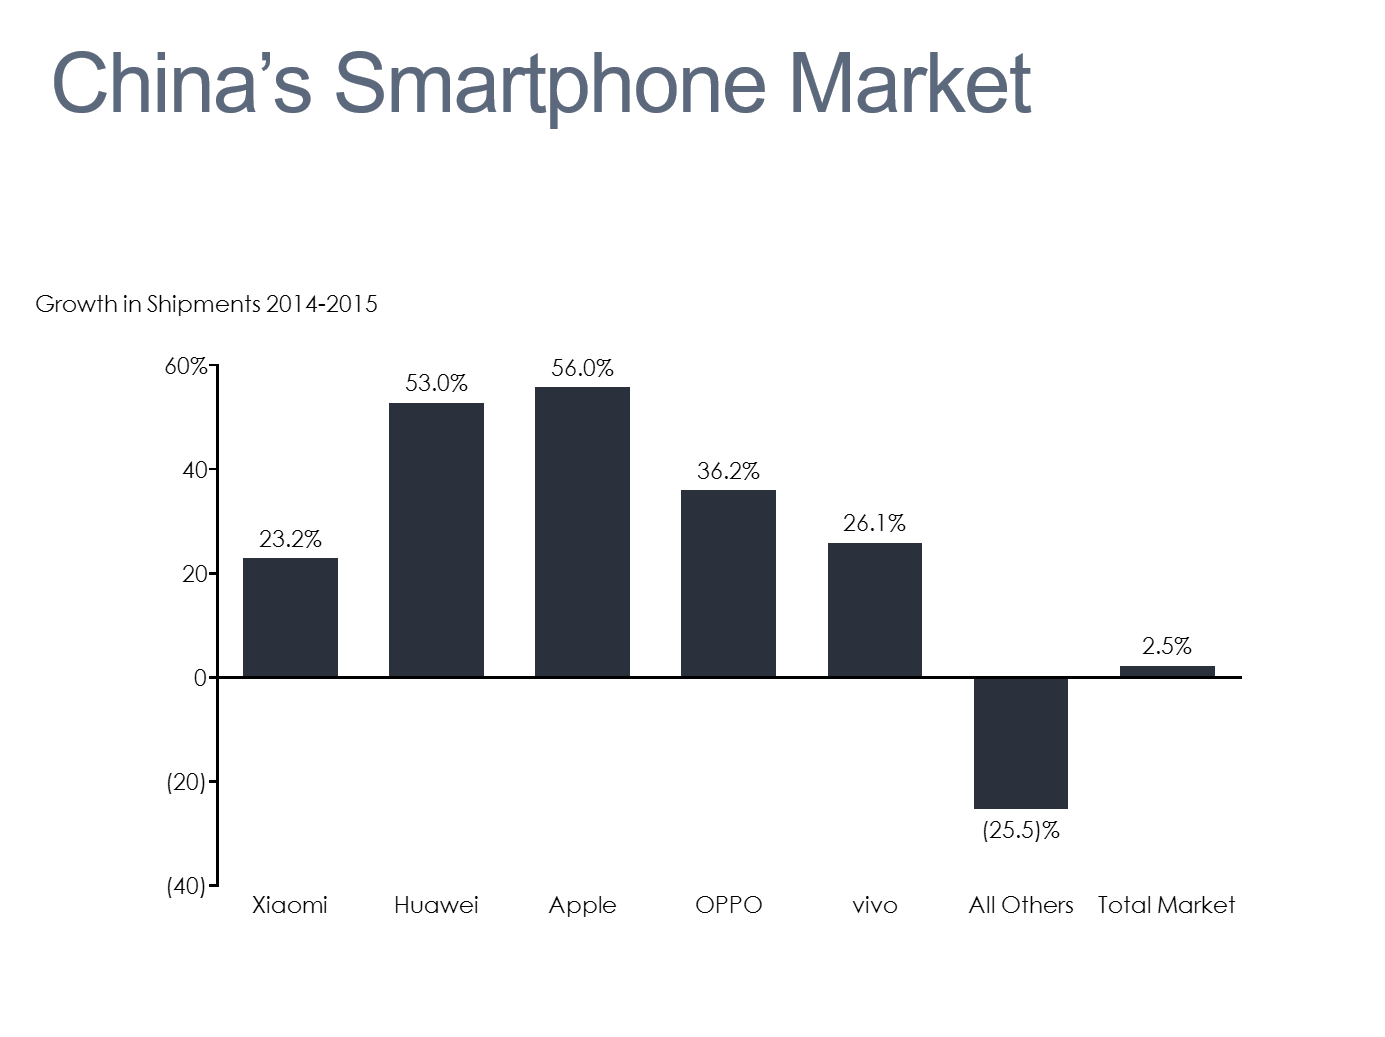 China's Smartphone Market Bar Chart